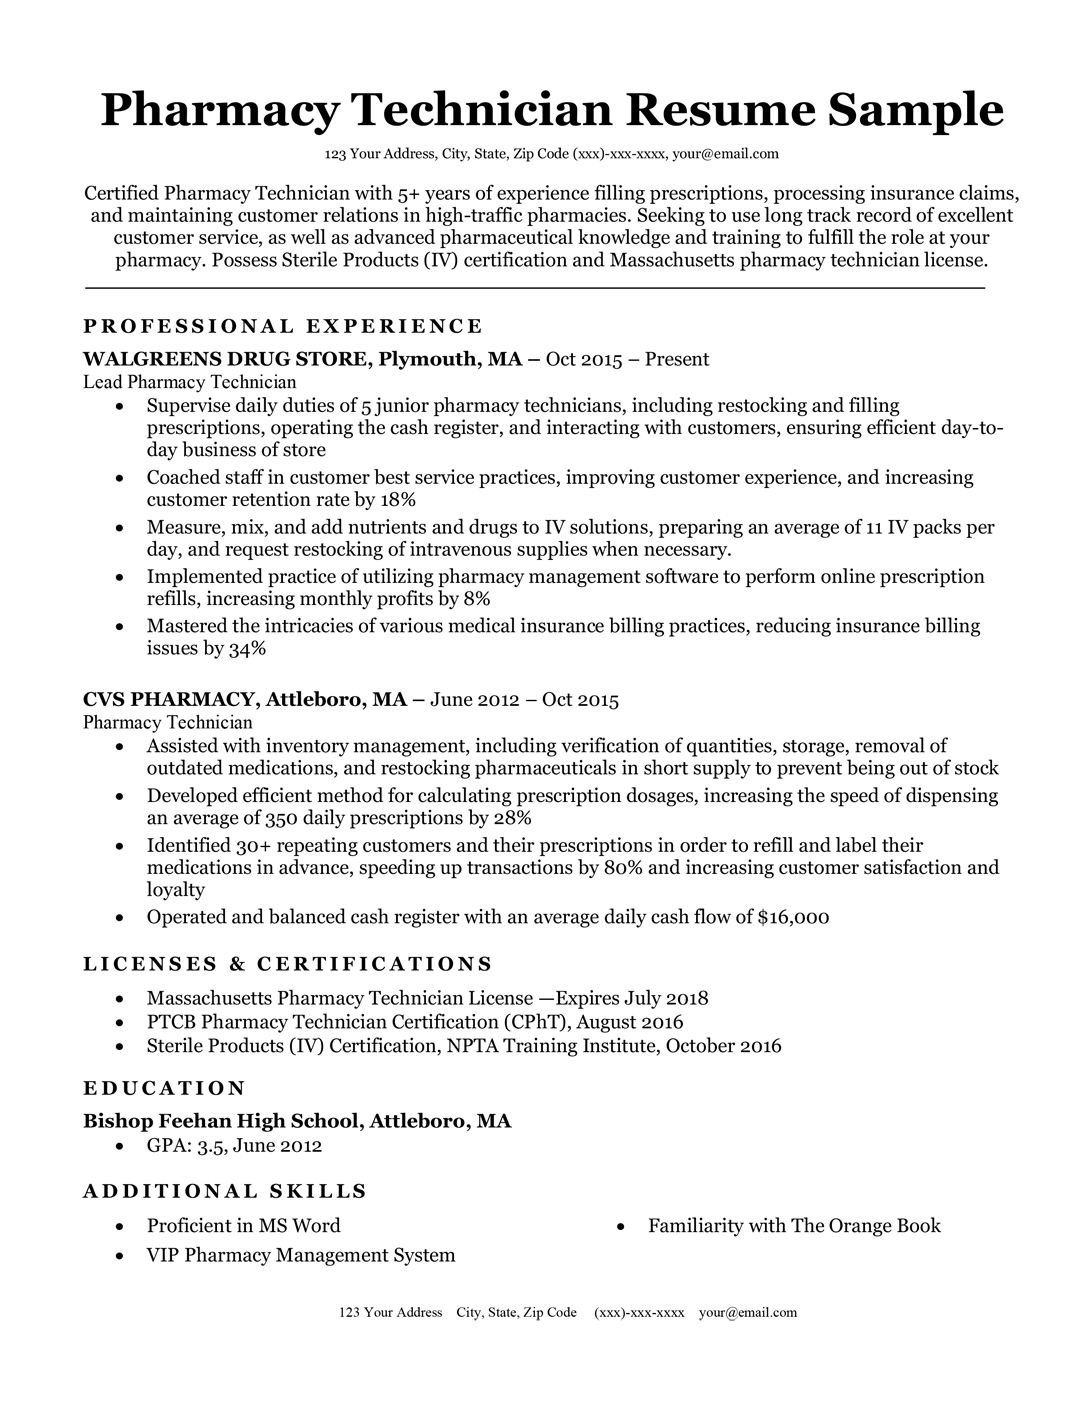 Pharmacy technician resume sample